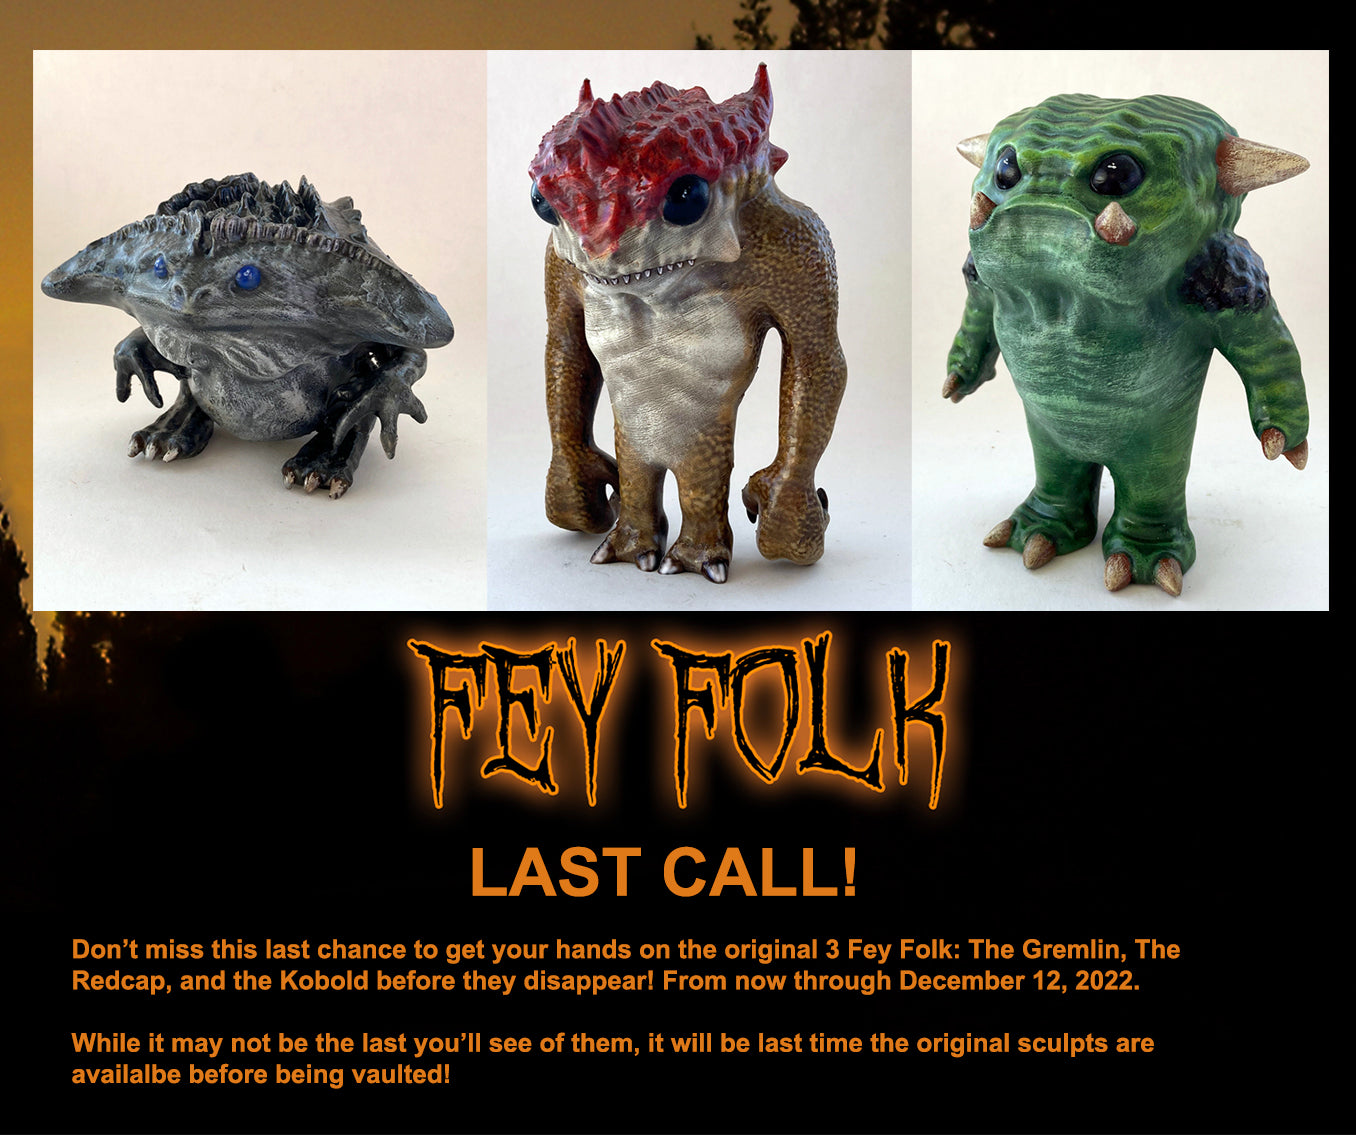 LAST CALL for Fey Folk Gremlin, Redcap and Kobold